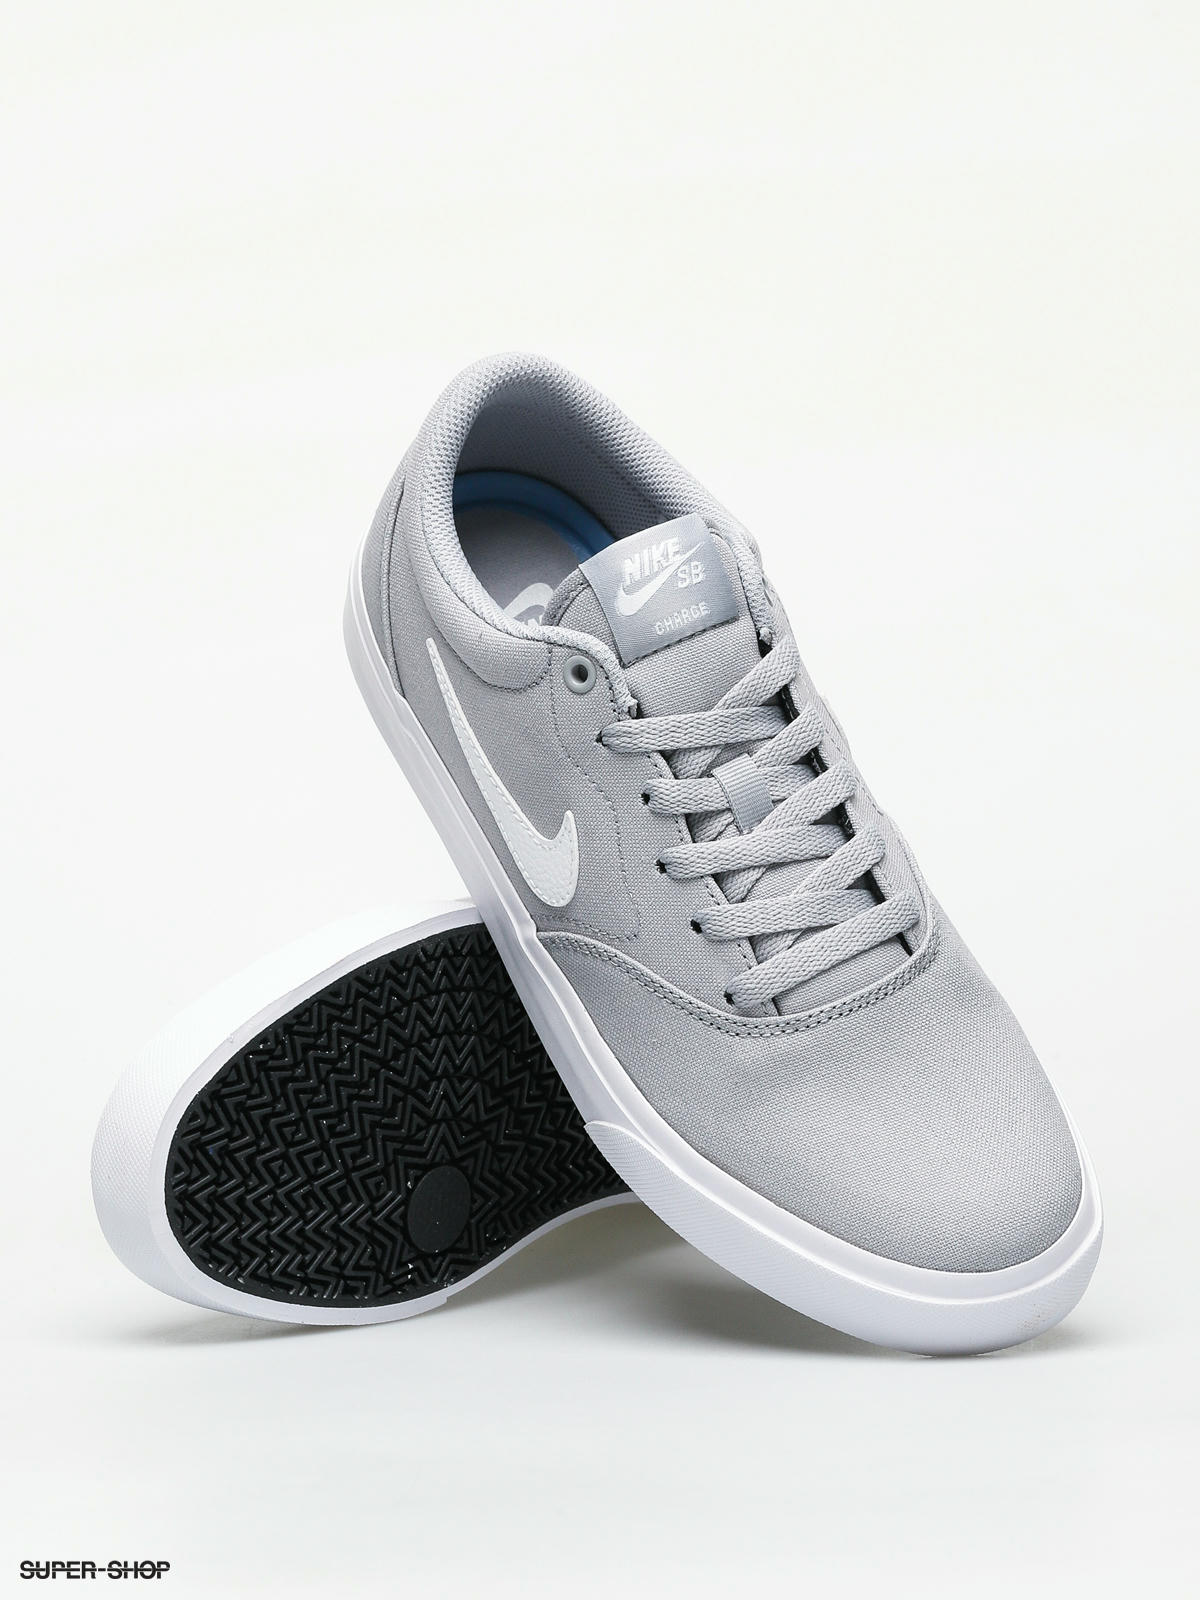 Nike SB Charge Slr Shoes (wolf grey/white)